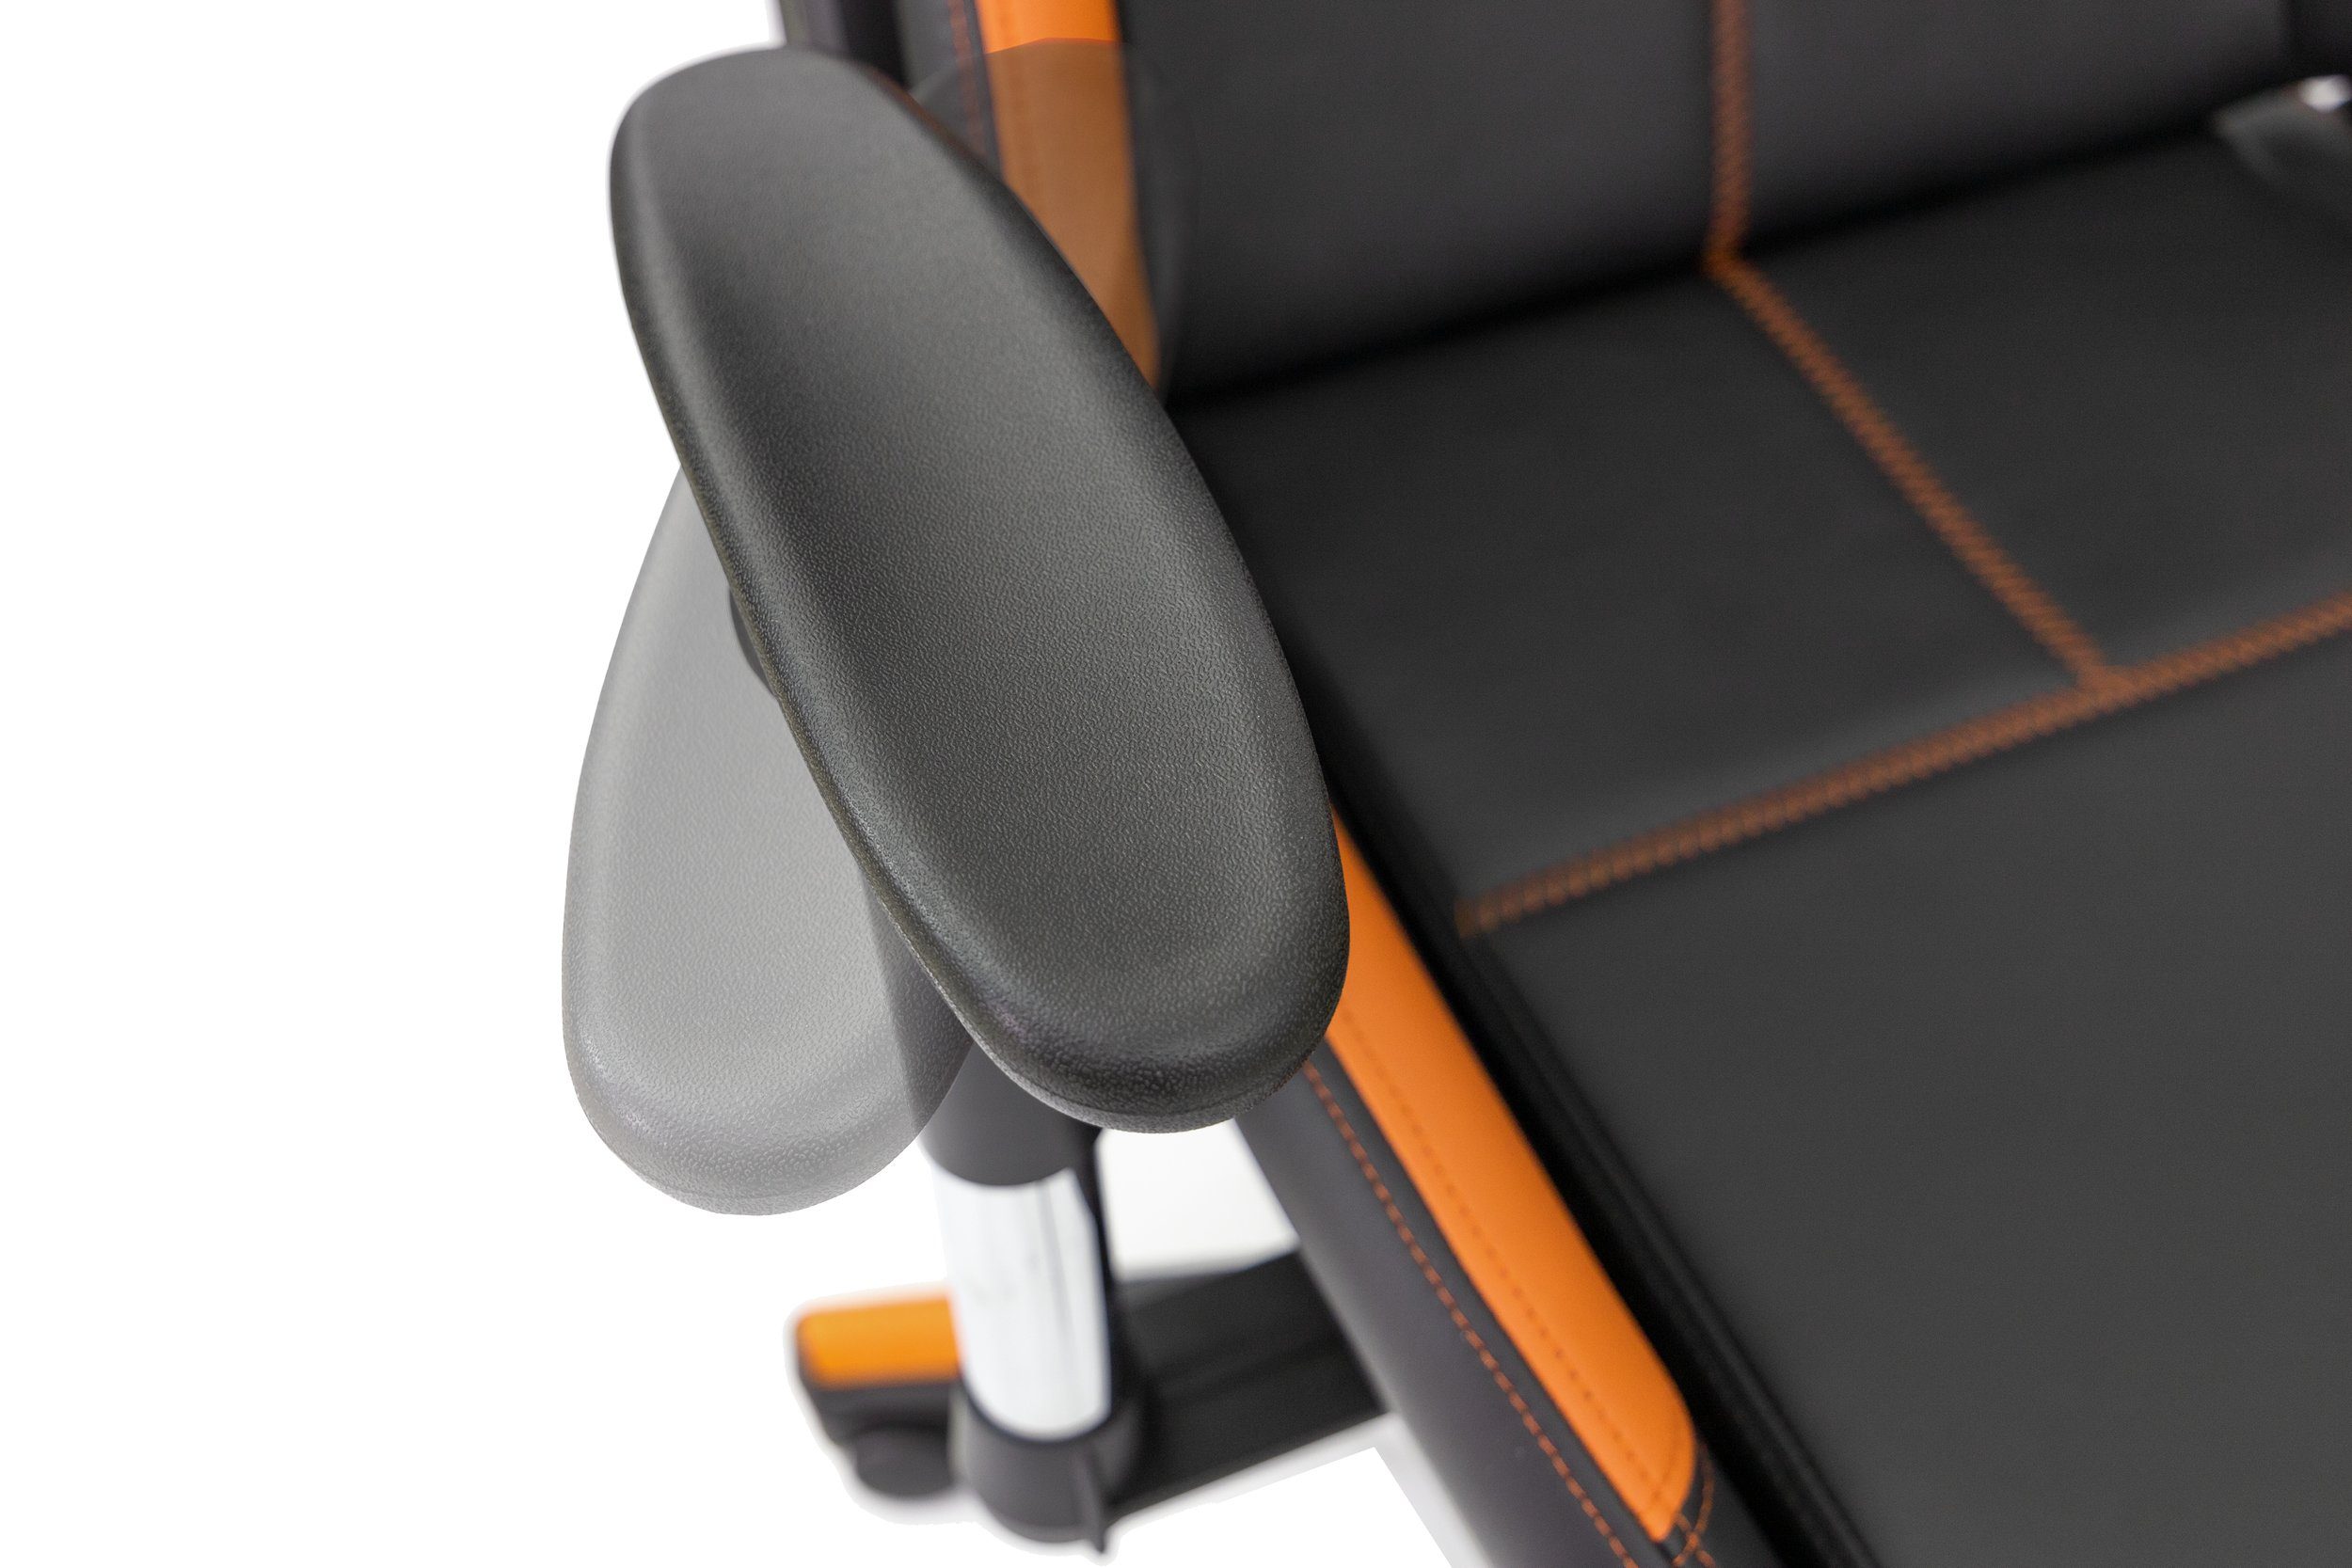 Stuhl (aus bis Lendenkissen - Racing Drehstuhl Kunstleder), XL Fire Bürostuhl Zockerstuhl, Orange 150 TPFLiving kg hochwertigem Belastbarkeit Gaming-Stuhl mit